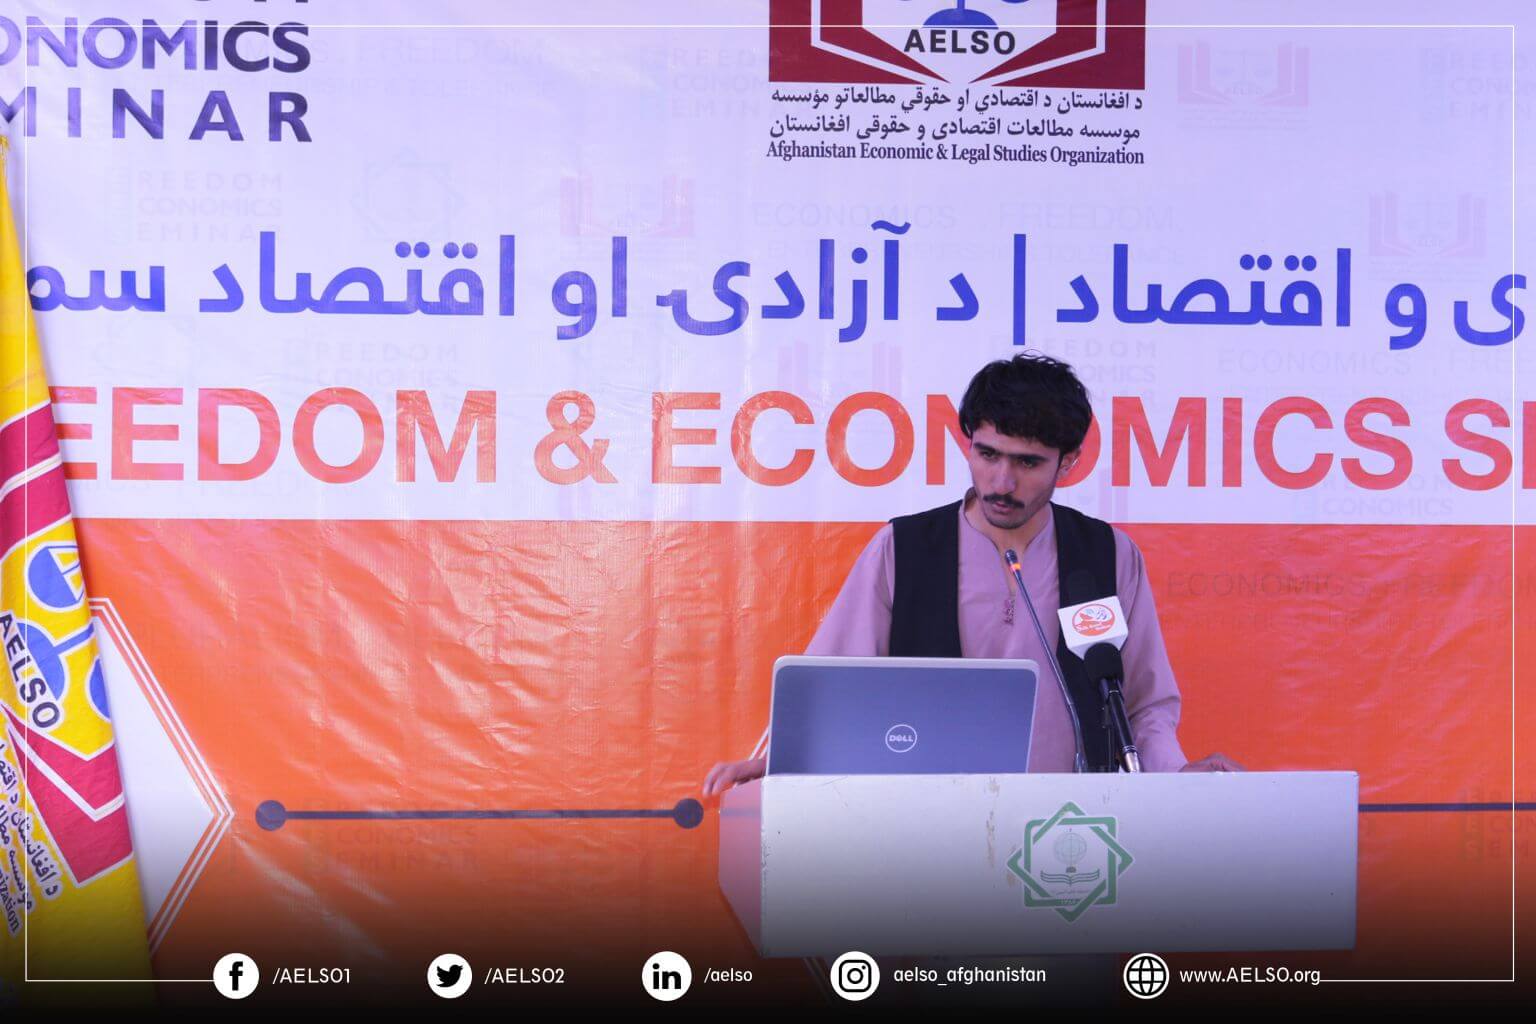 Nisar Ahmad Alokozay; another participant of Freedom & Economics Seminar in Ghazni Province